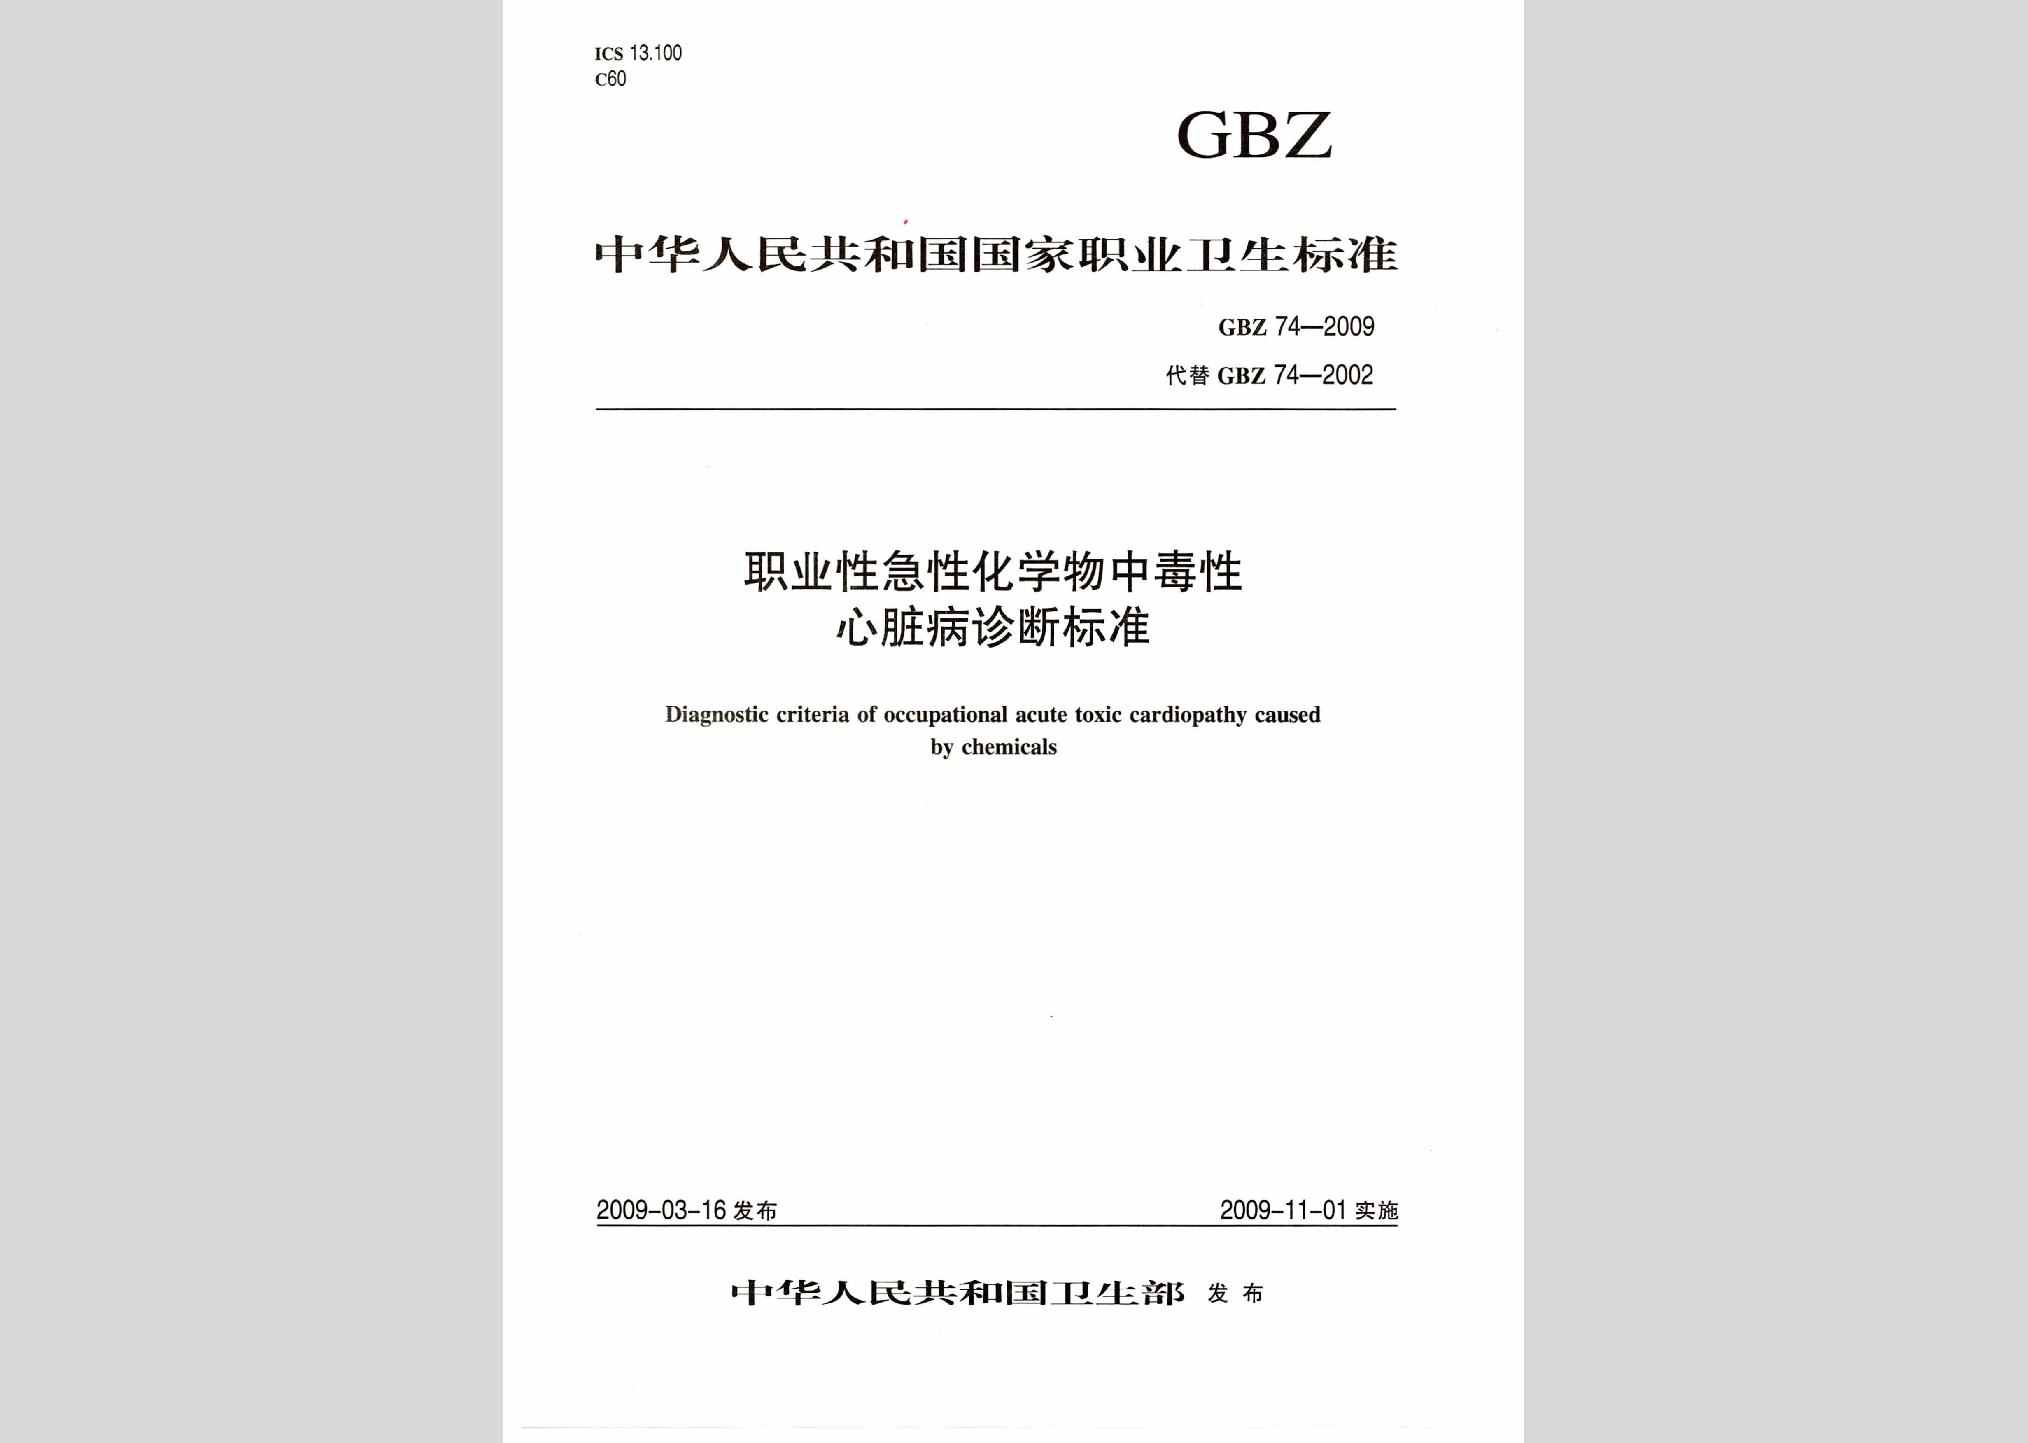 GBZ74-2009：职业性急性化学物中毒性心脏病诊断标准